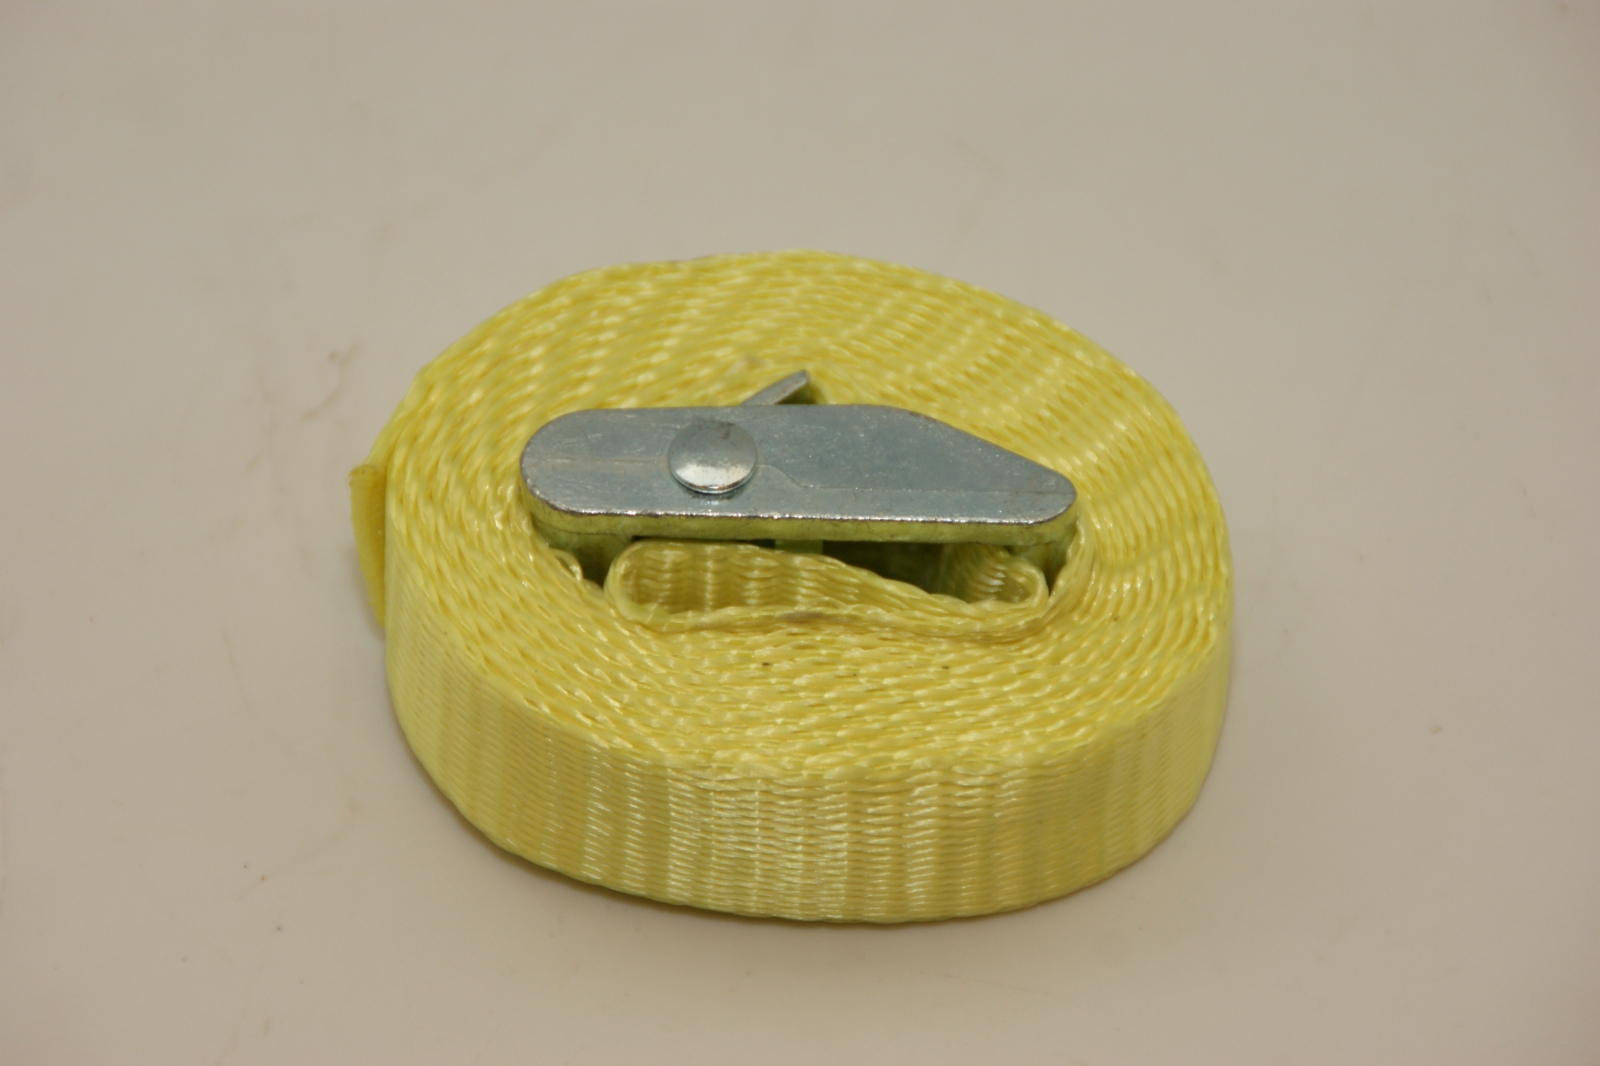 Sjorband: Bagagegordel geel, 25mm 2m 500 daN